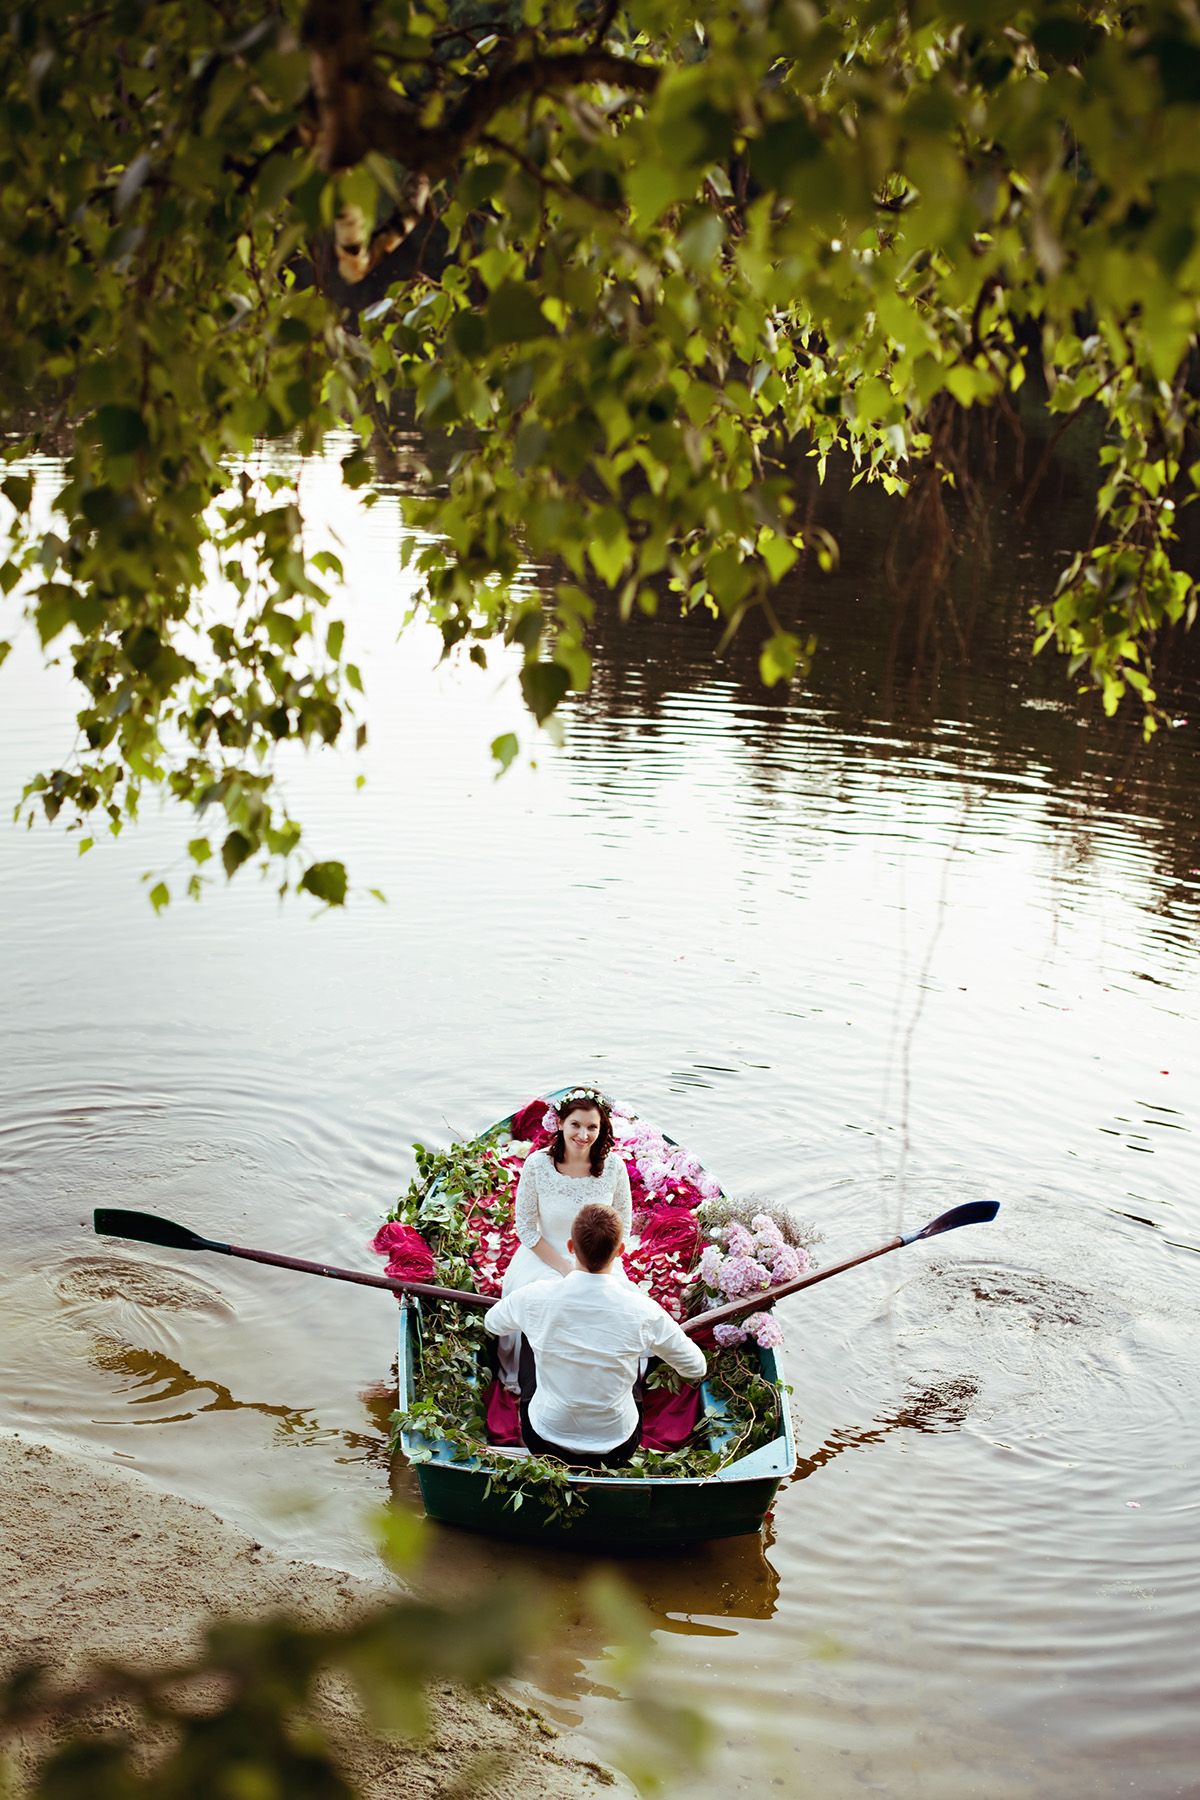 wedding in style wedding boat couple Flowers